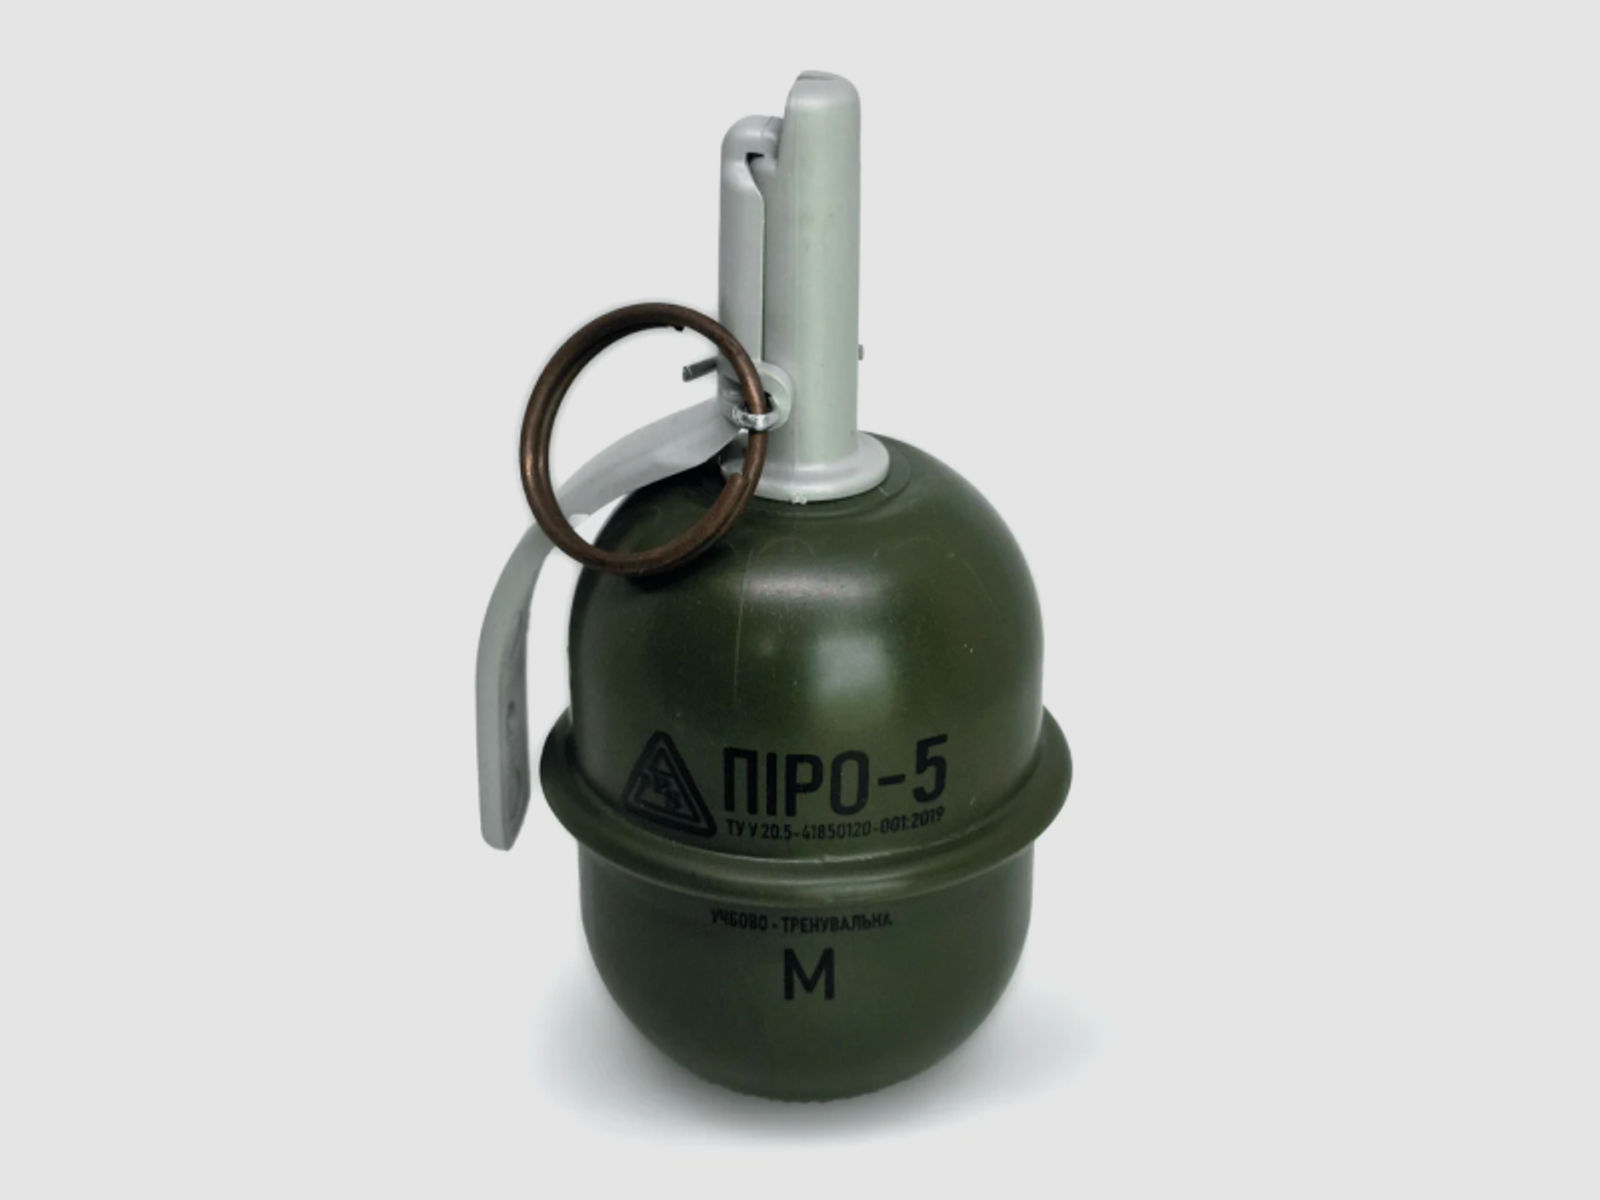 Pyrosoft PIRO-5G MilSim RGD-5 Simulationsgranate mit Kipphebel